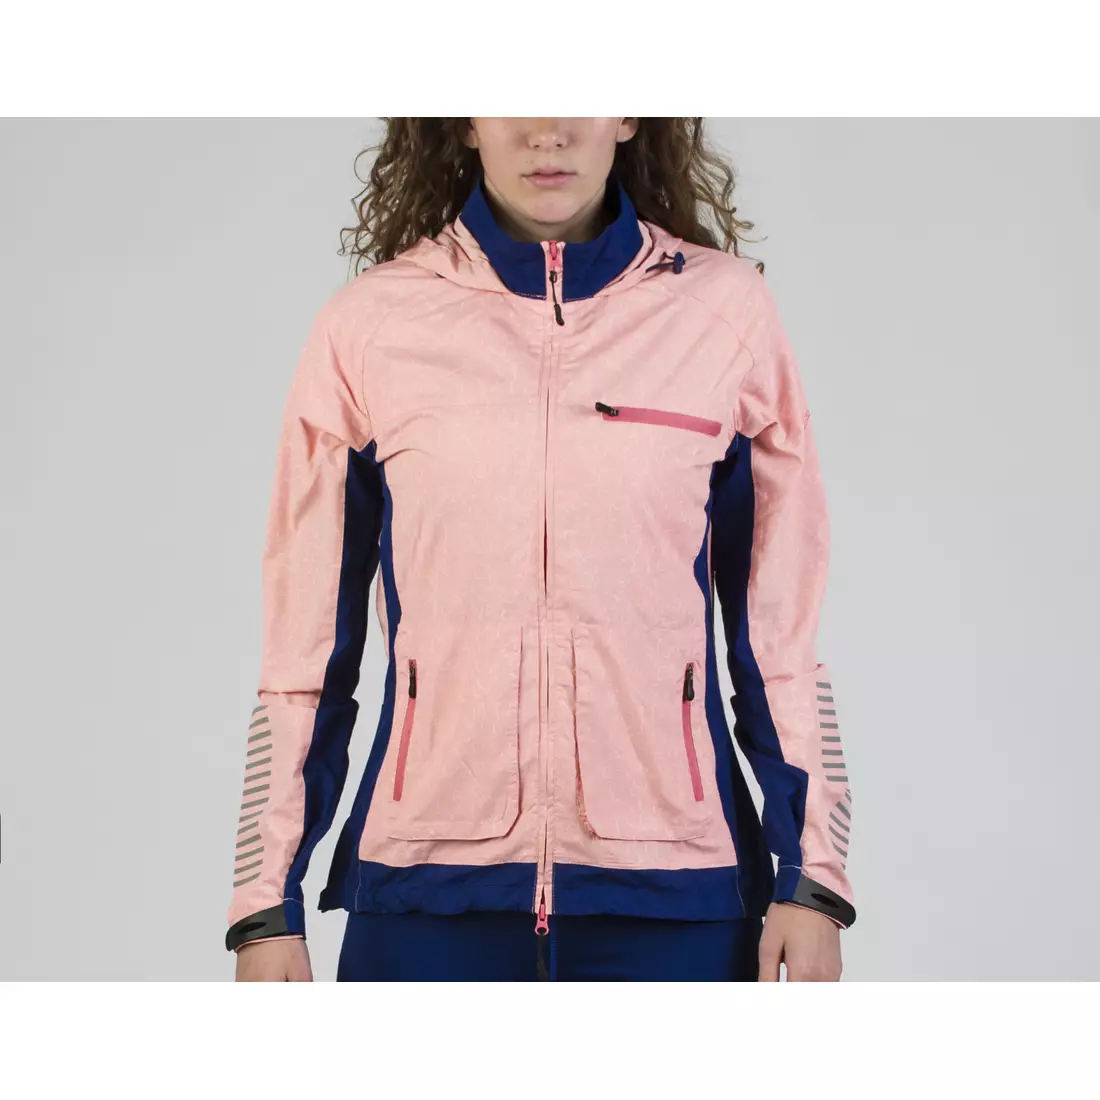 ROGELLI RUN DESIRE 840.865 - women's lightweight running windbreaker jacket, pink-coral